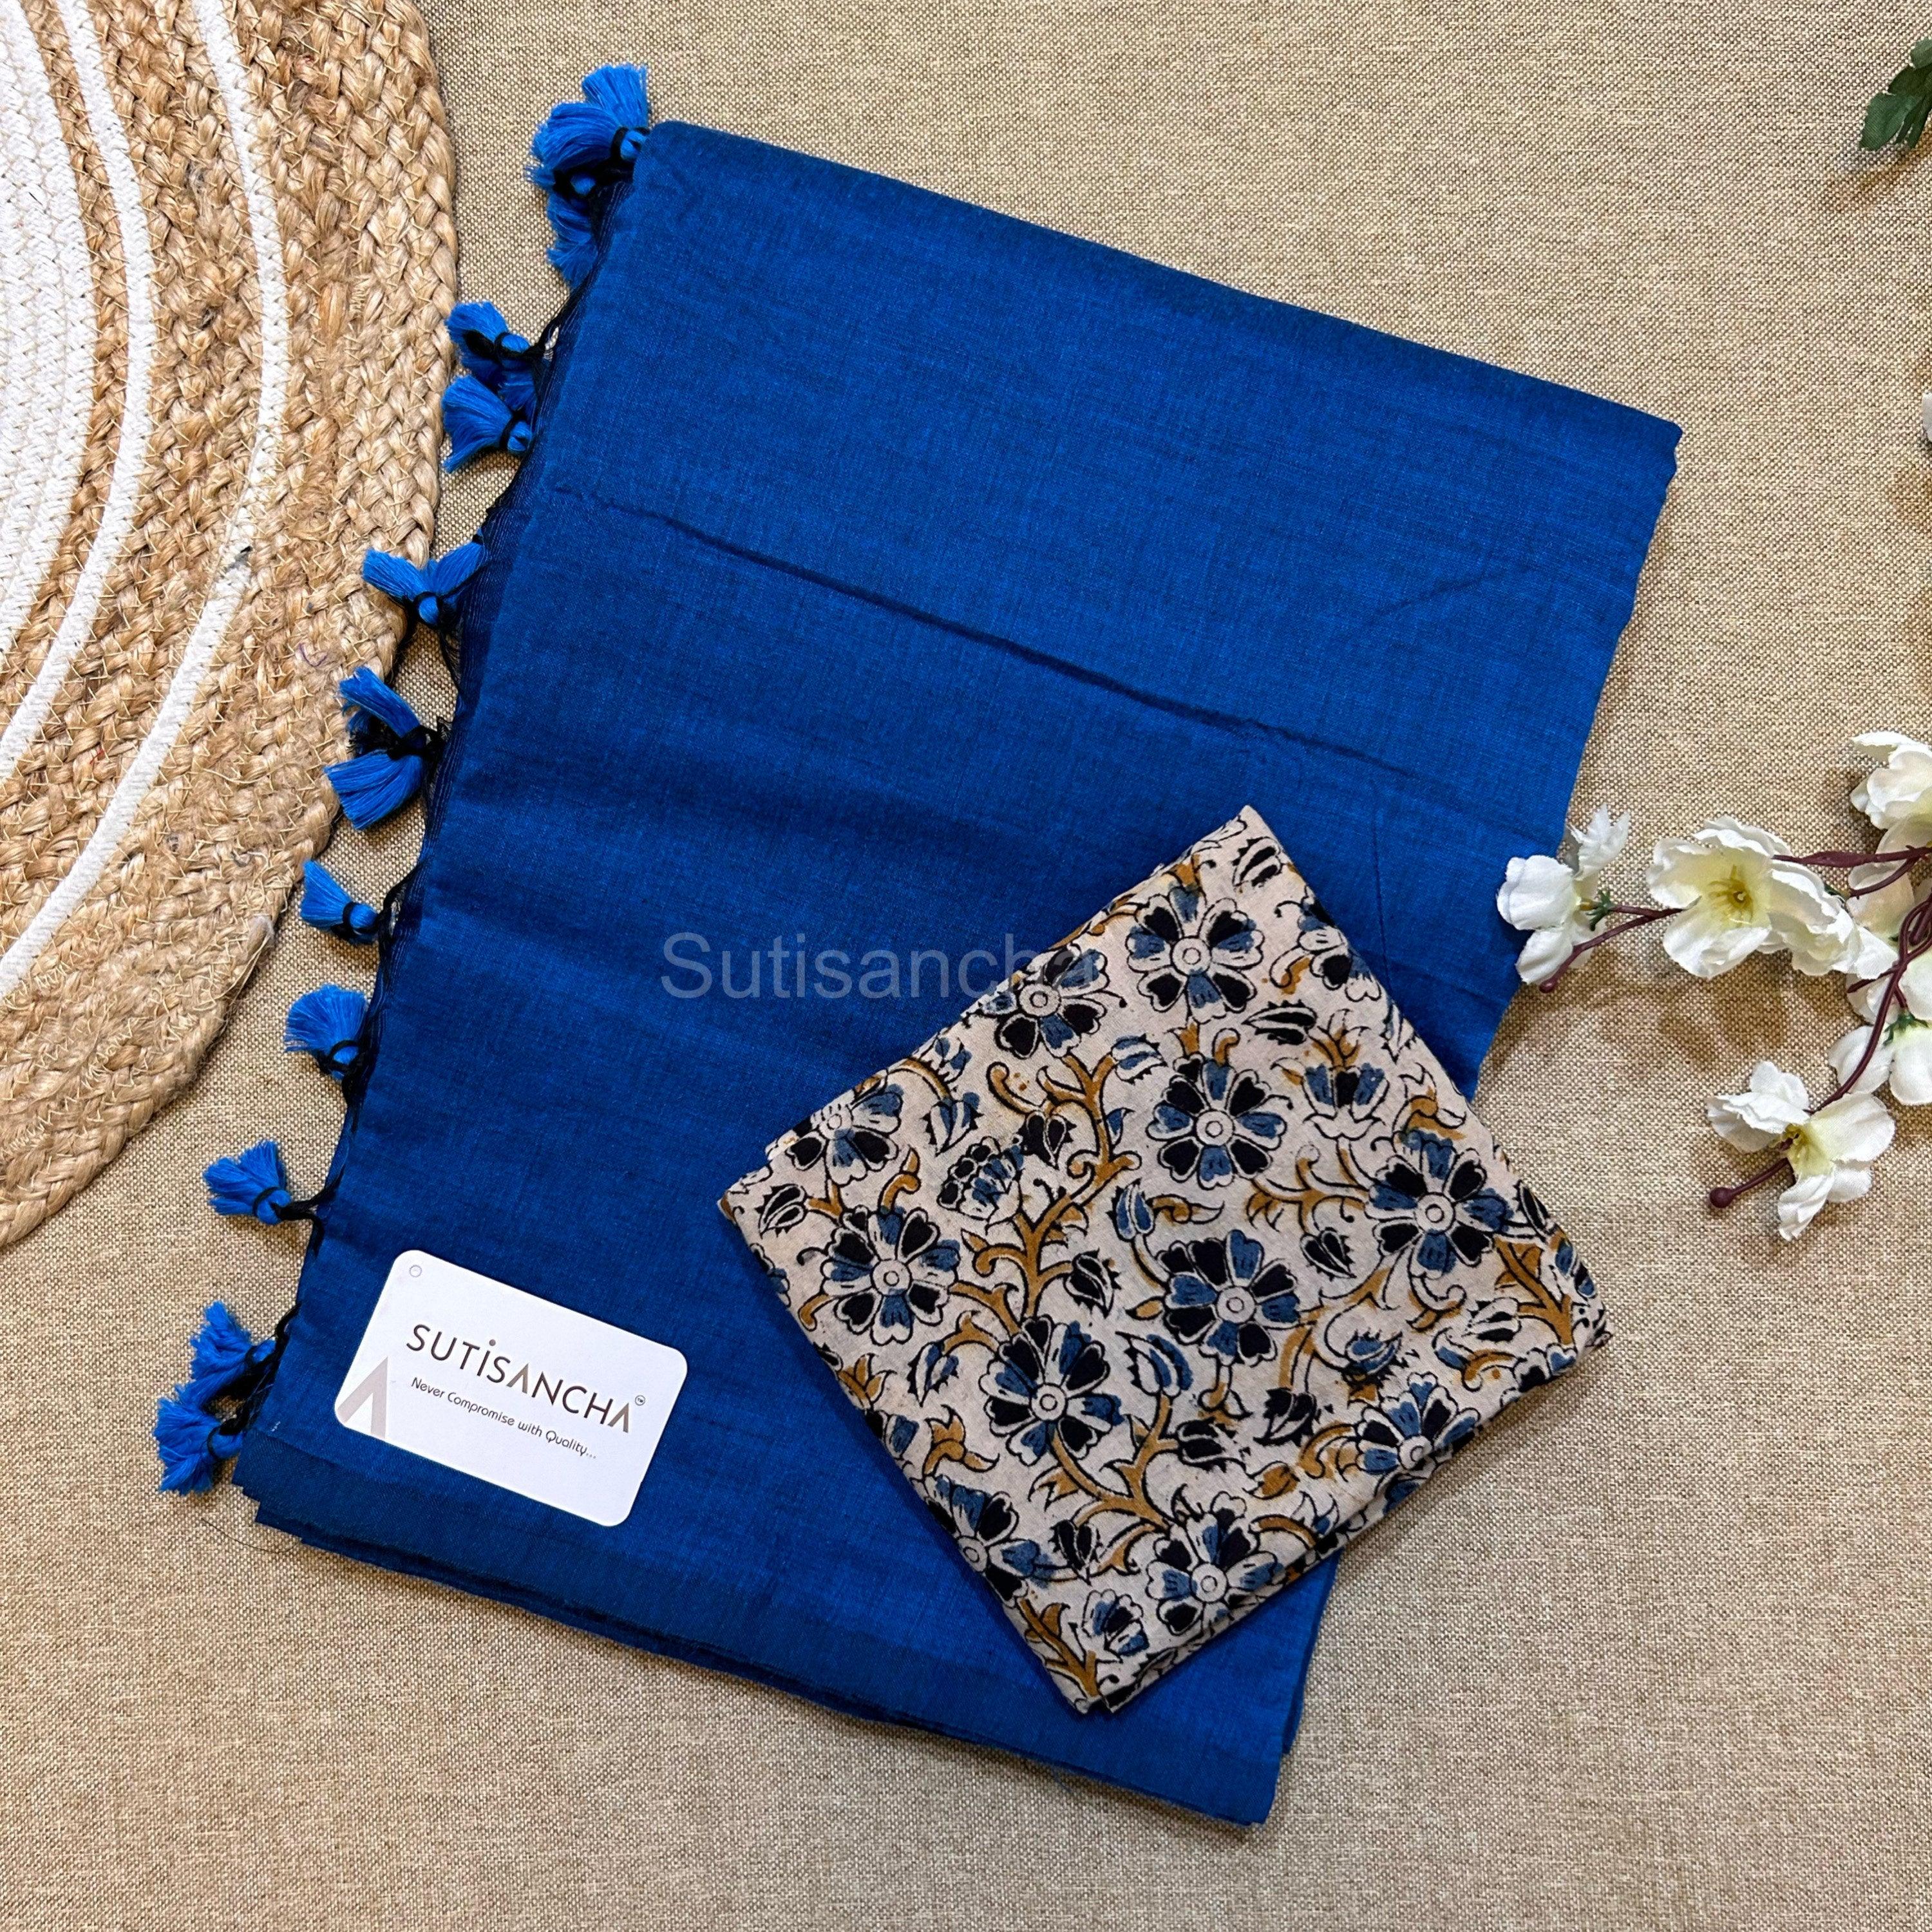 Sutisancha Indigo blue Khadi Saree & Cotton Design Blouse - Suti Sancha